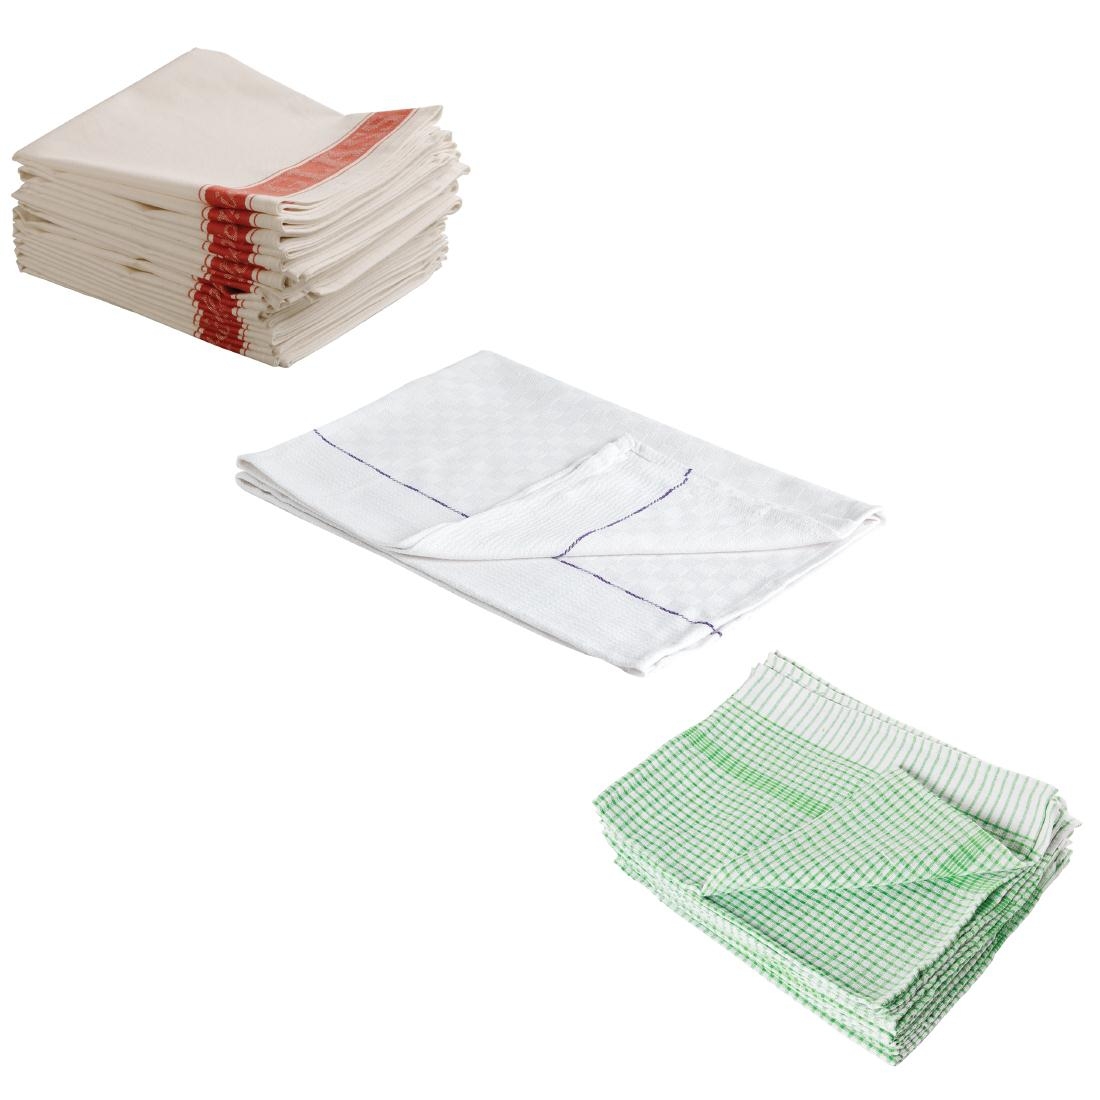 Special Offer Set of 3 cloths - tea towels (E700) with waiting cloths (E900) and glass cloths (E910)